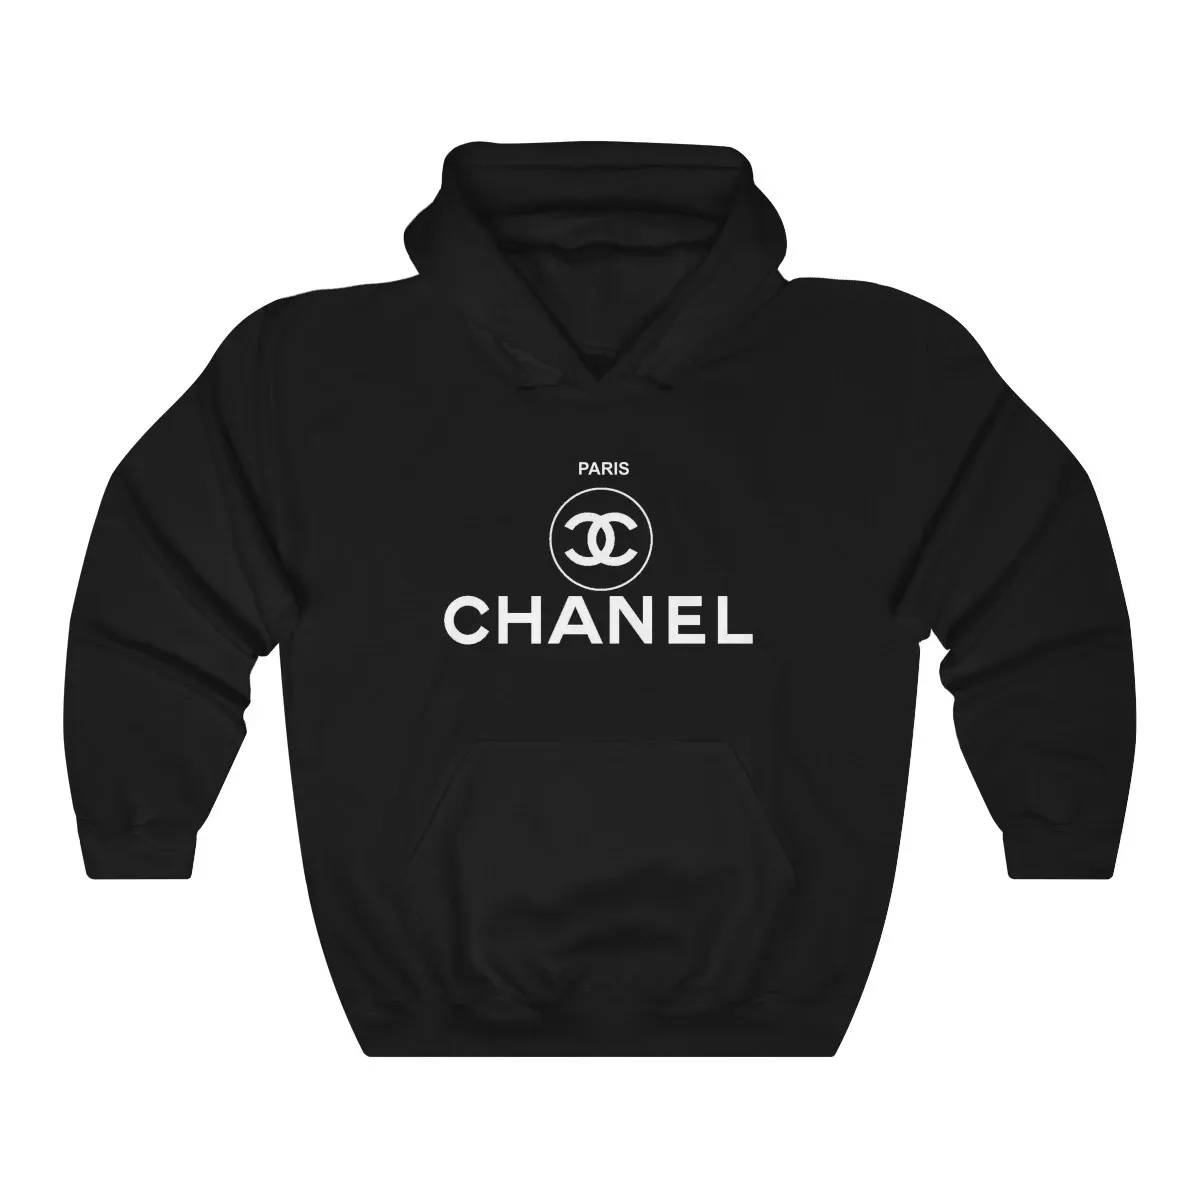 Chanel Sweater Unisex Hooded SweaShirt